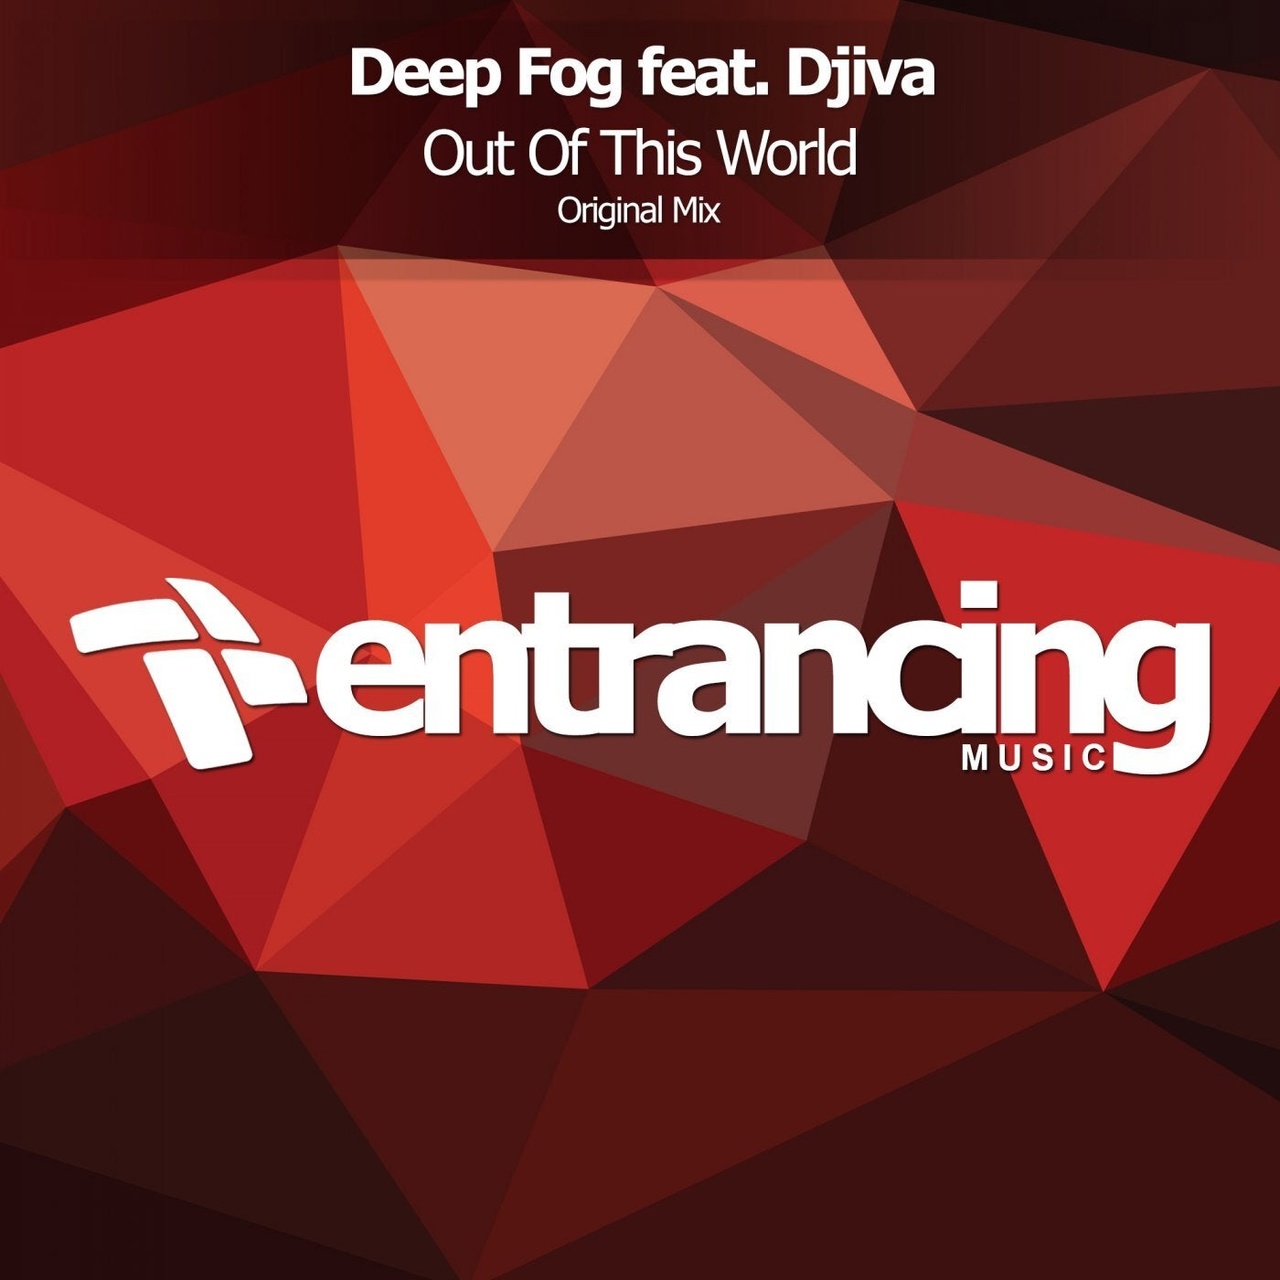 Deep Fog Feat. Djiva - Out Of This World (Original Mix)